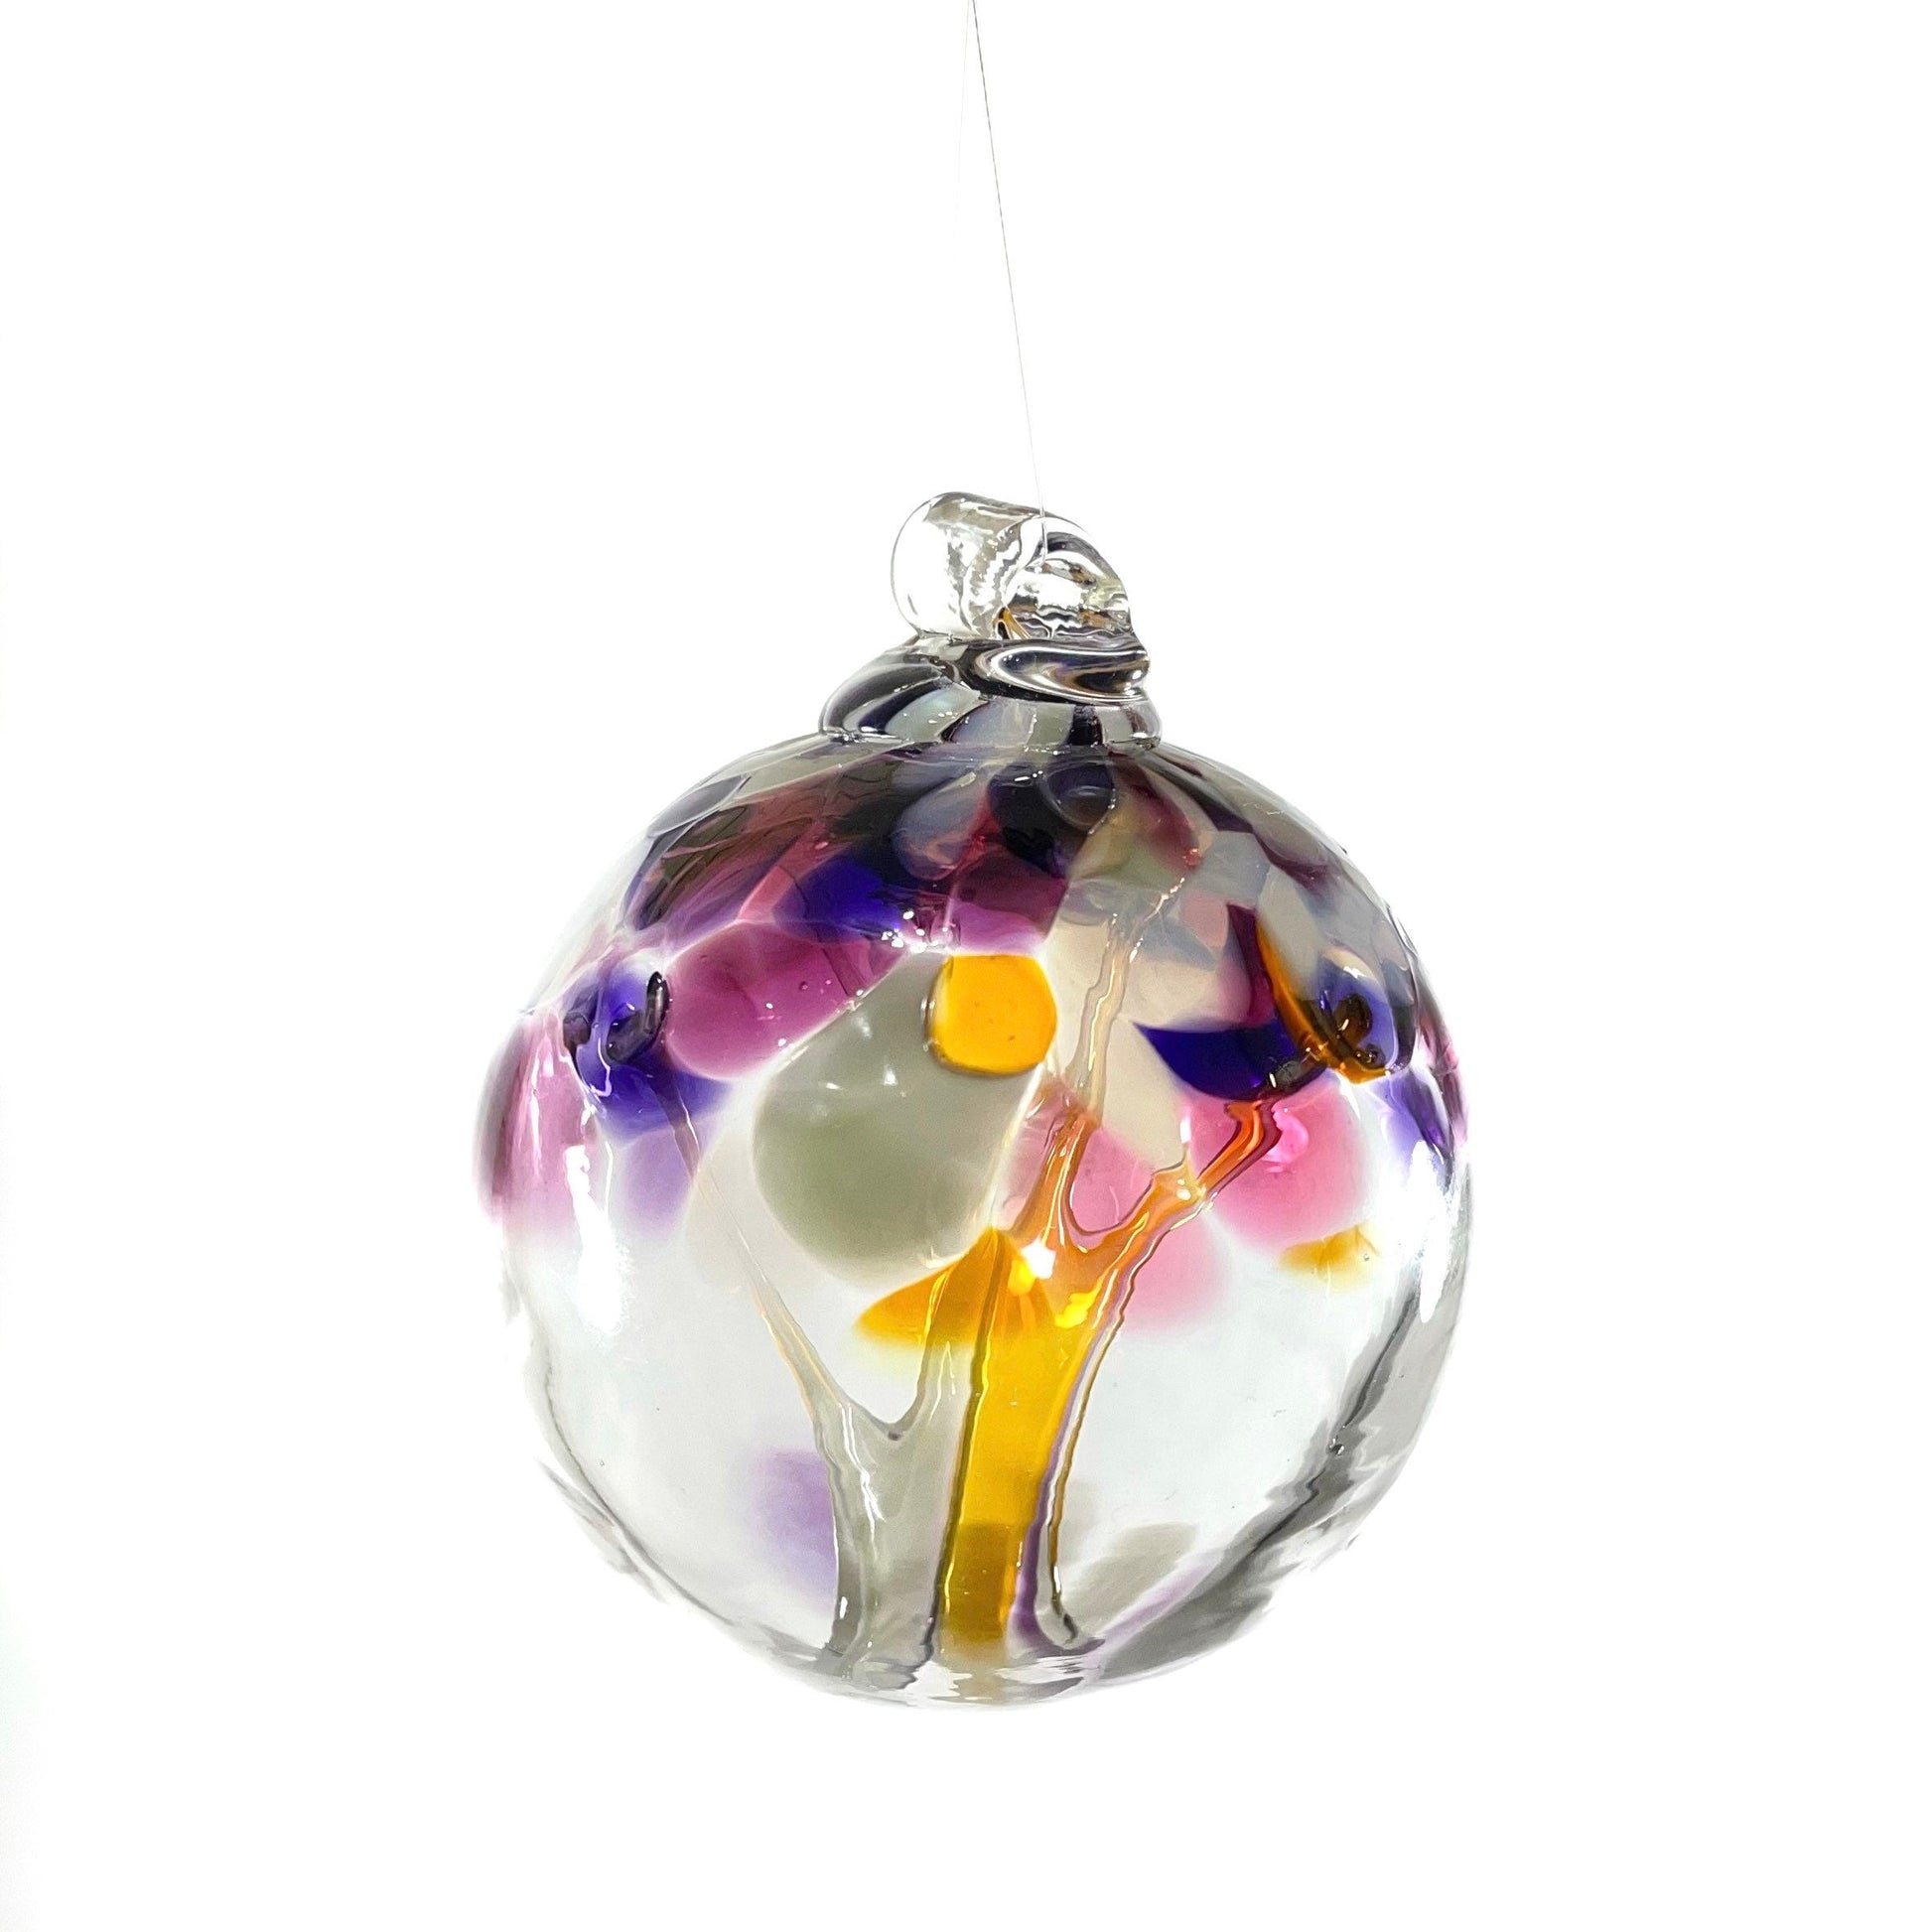 Handmade Glass Art 2” Globe Ornament - Tree of Grandparents